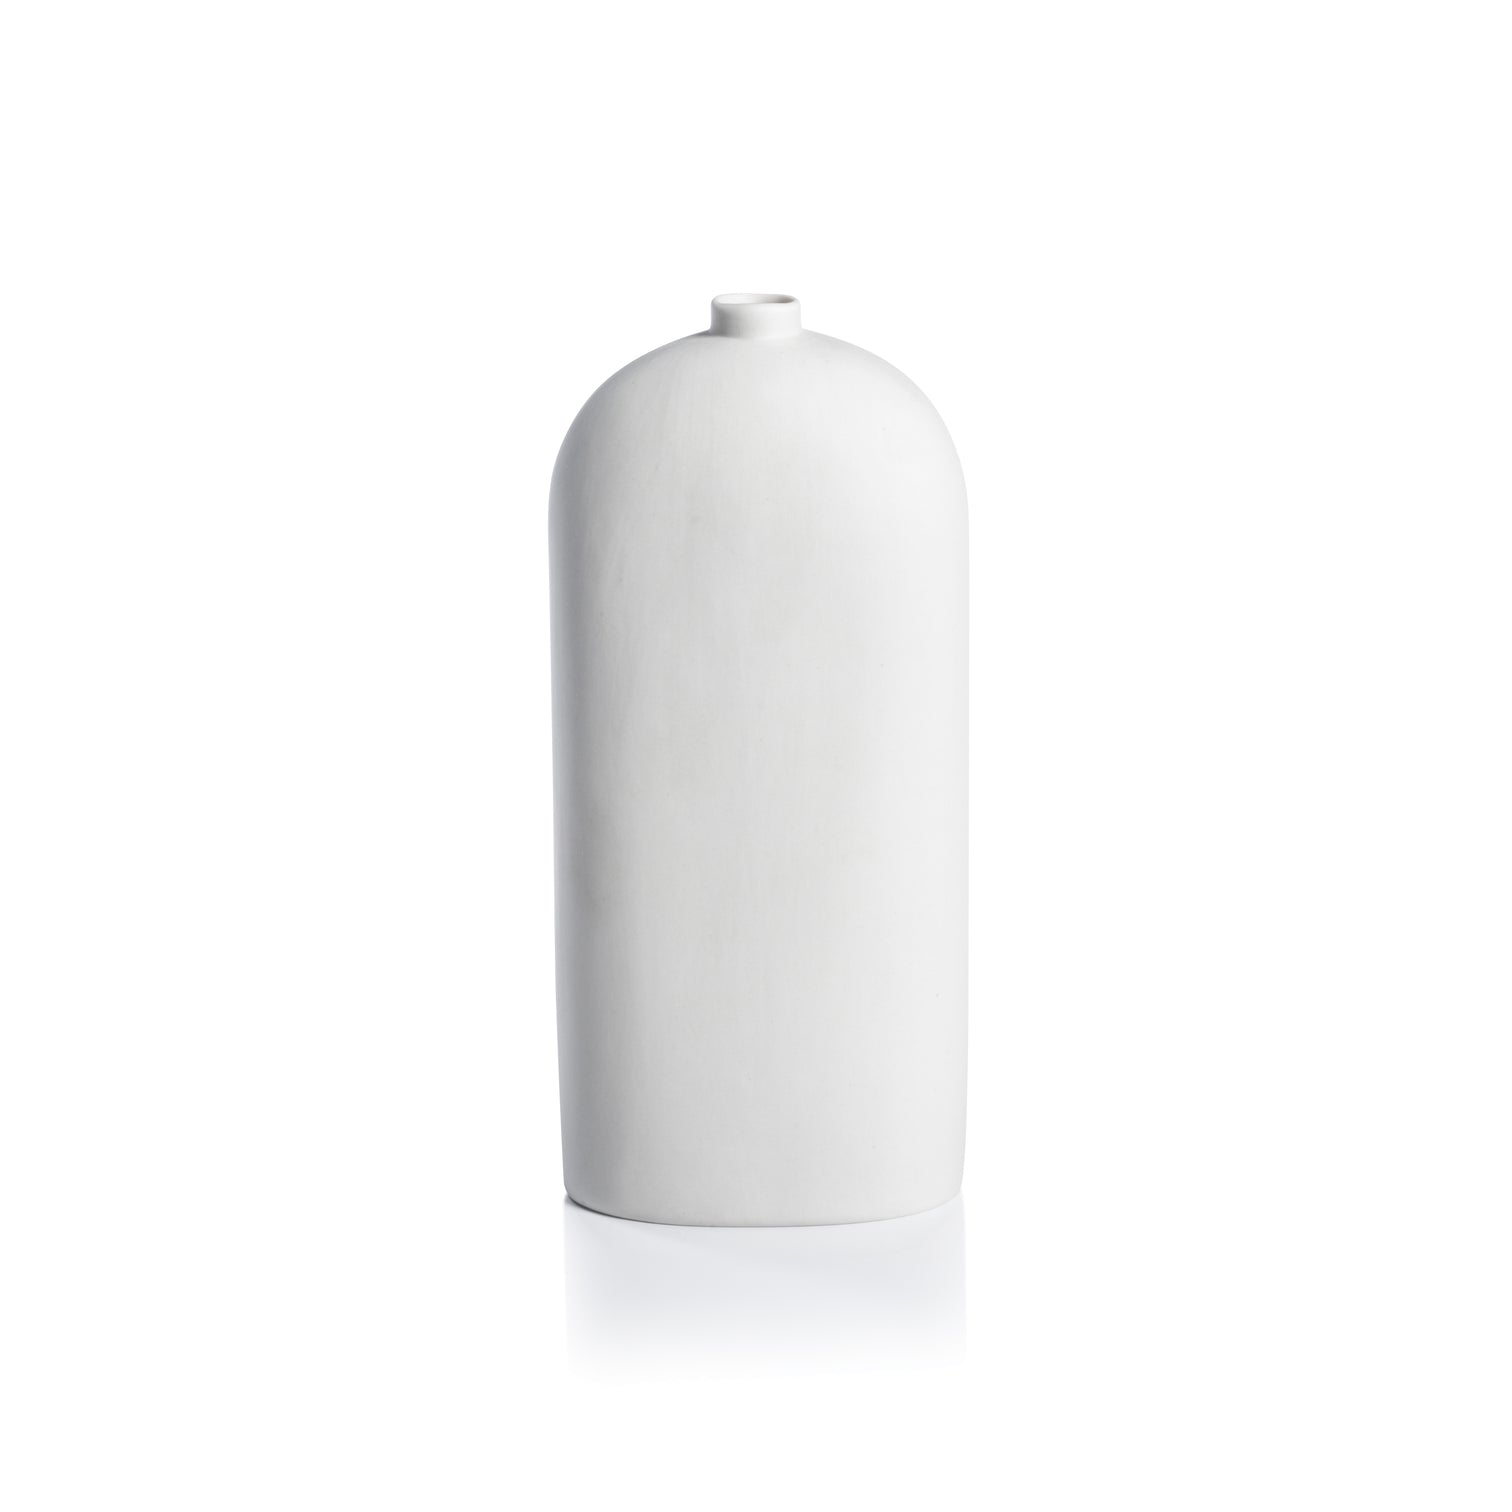 Lily White Ceramic Vase